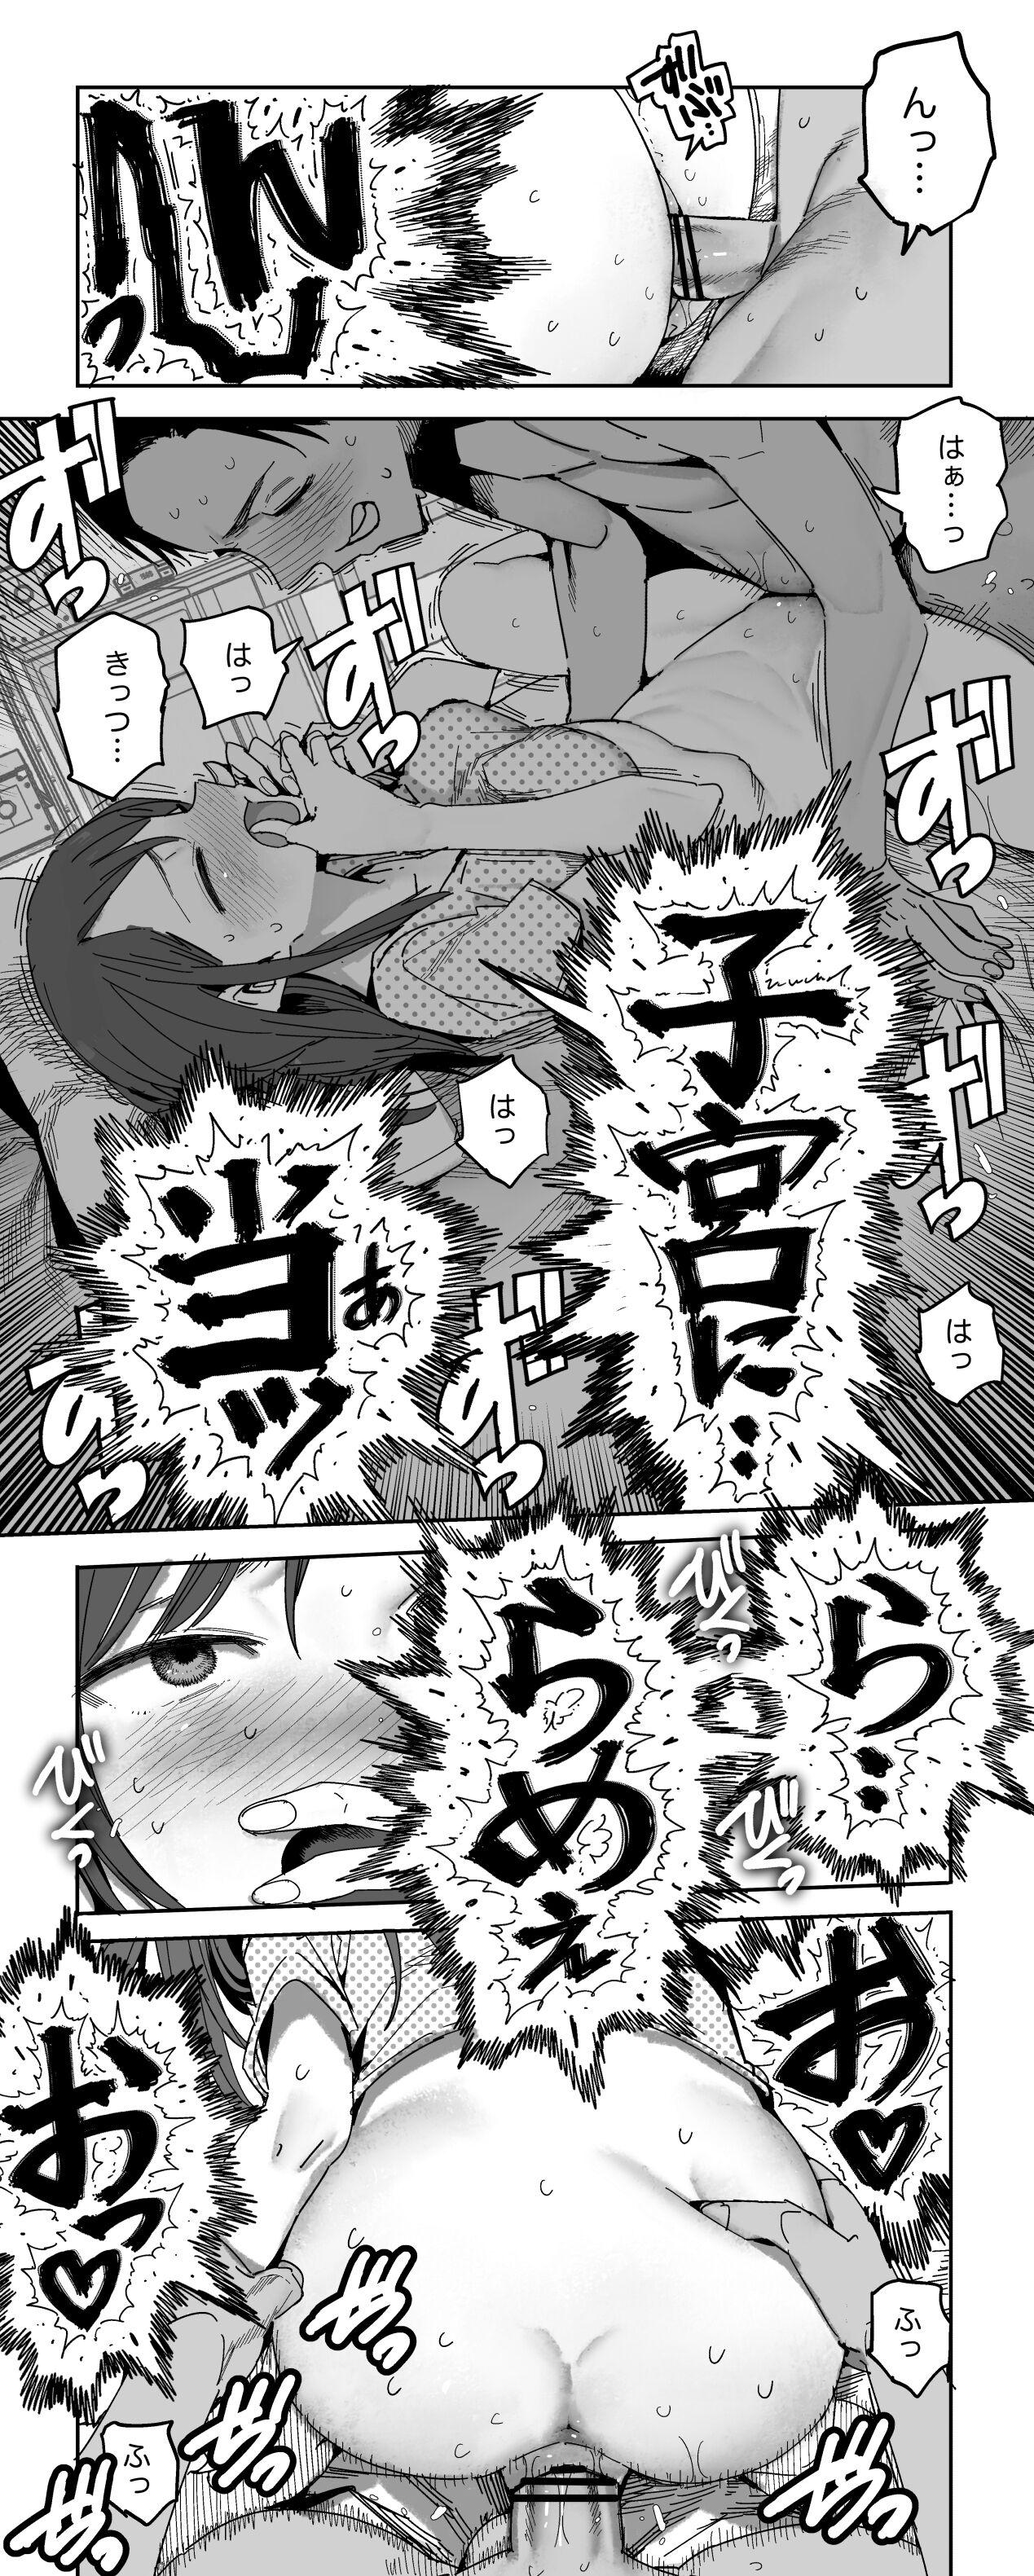 Affair Are ga Chotto Ookii Ko no Omake Manga - Original Close Up - Page 3